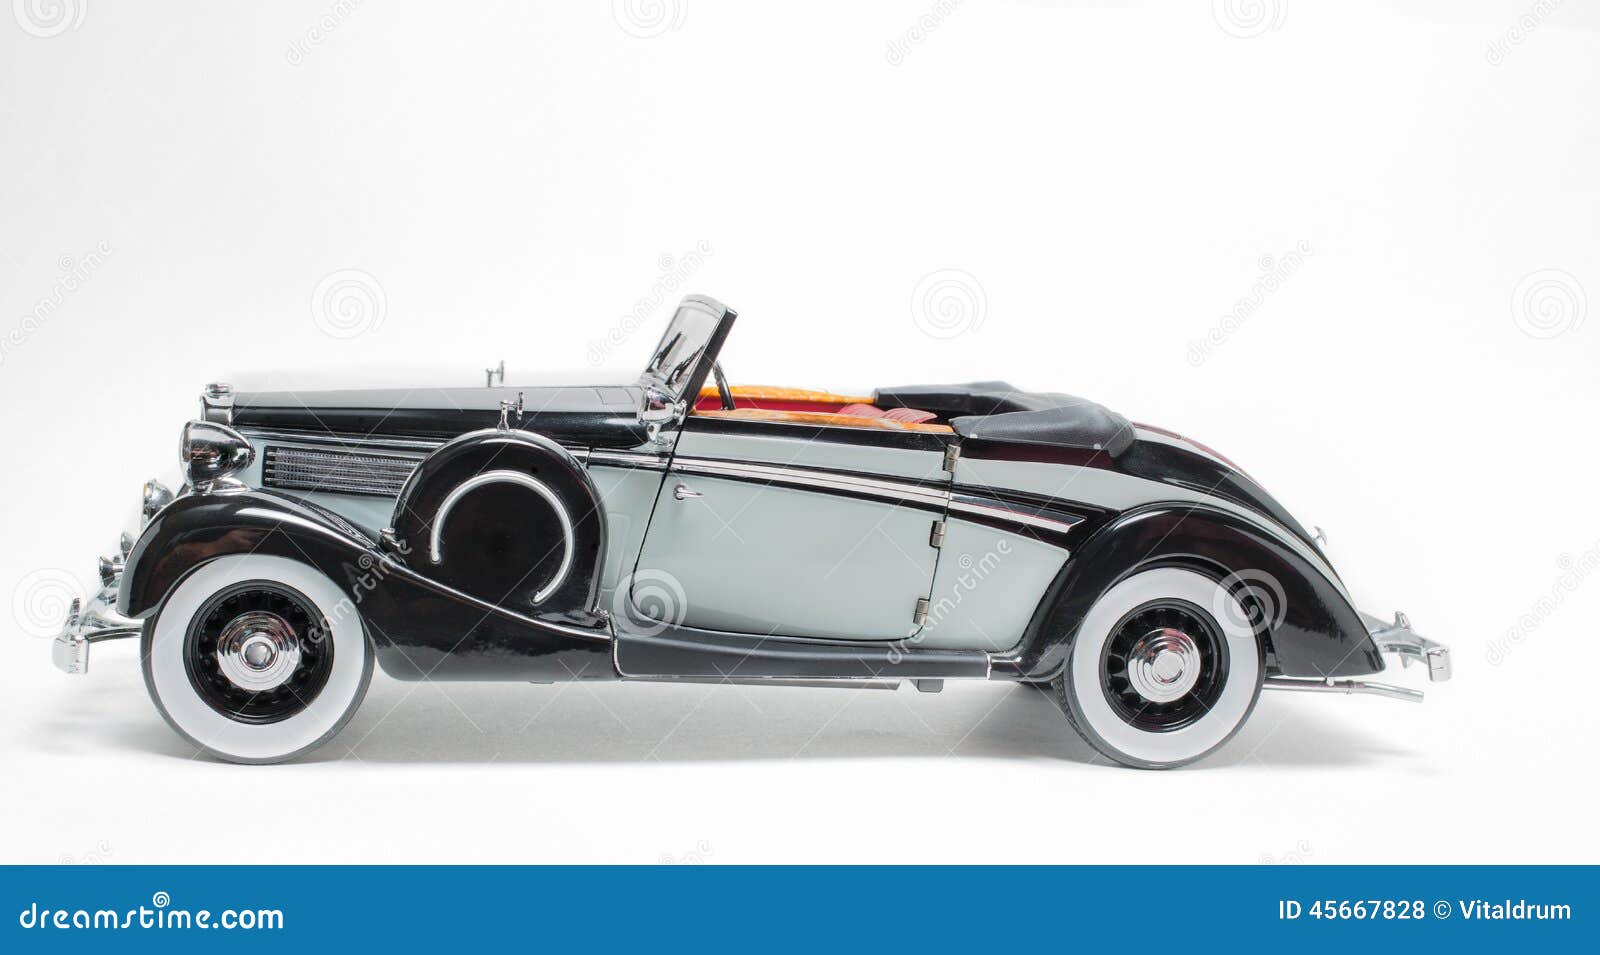 Retro Black And Grey Color Vintage Classic Car Model 